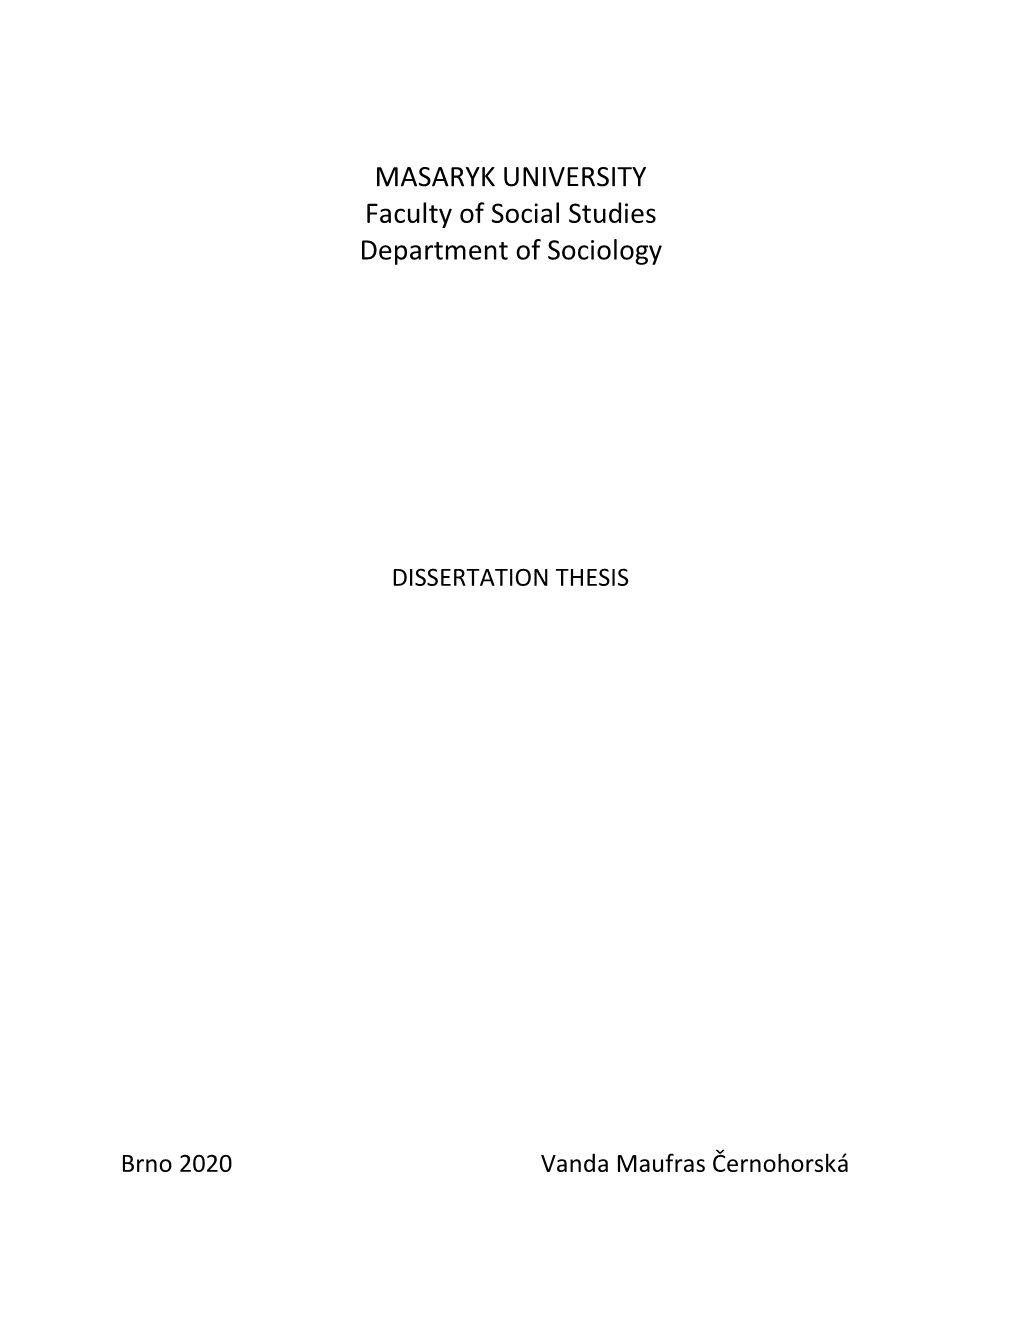 MASARYK UNIVERSITY Faculty of Social Studies Department of Sociology